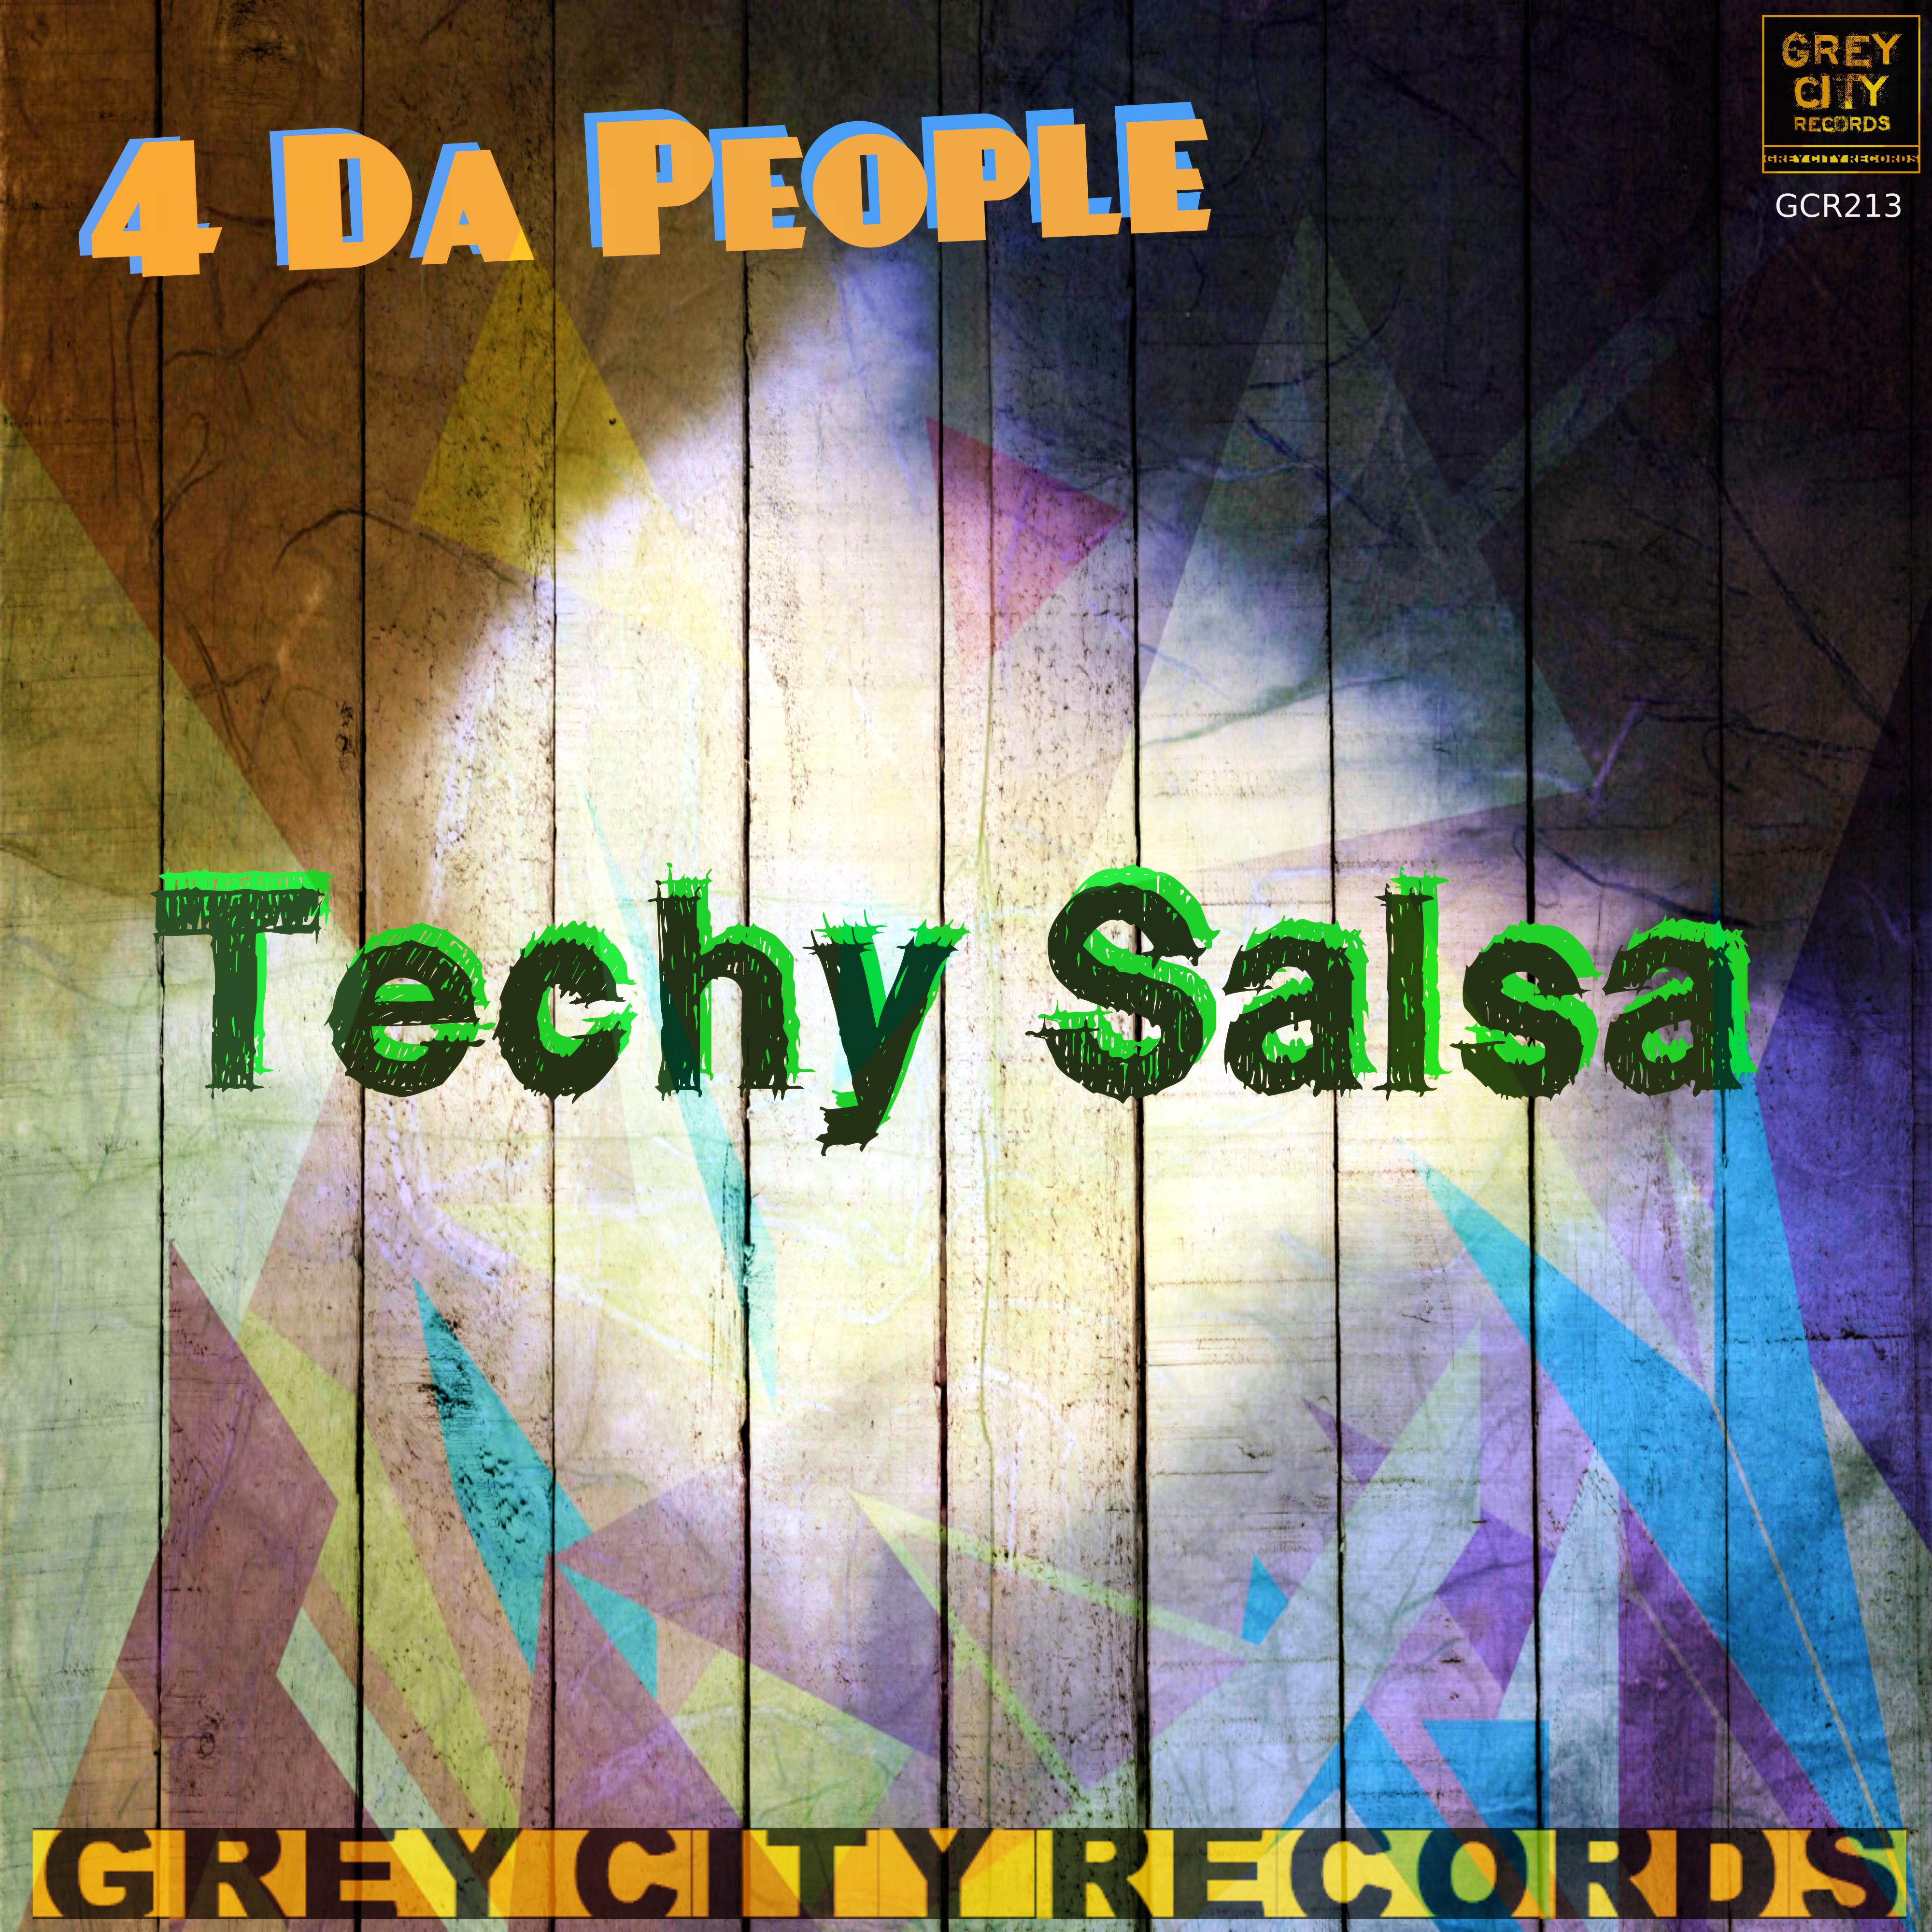 Techy Salsa